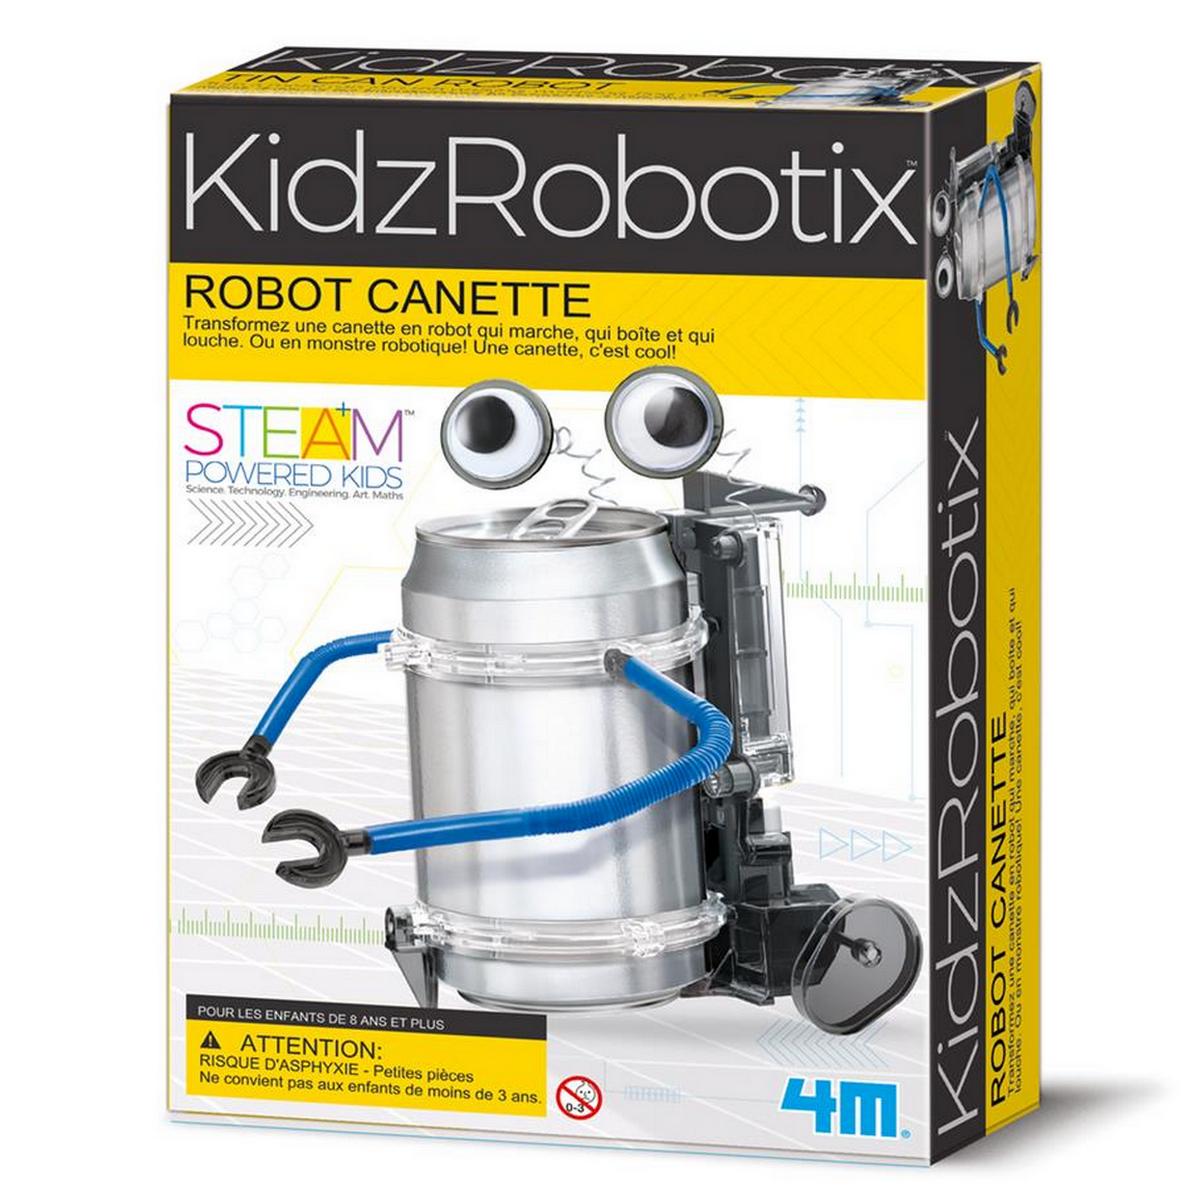 Robot canette Kidzrobotix